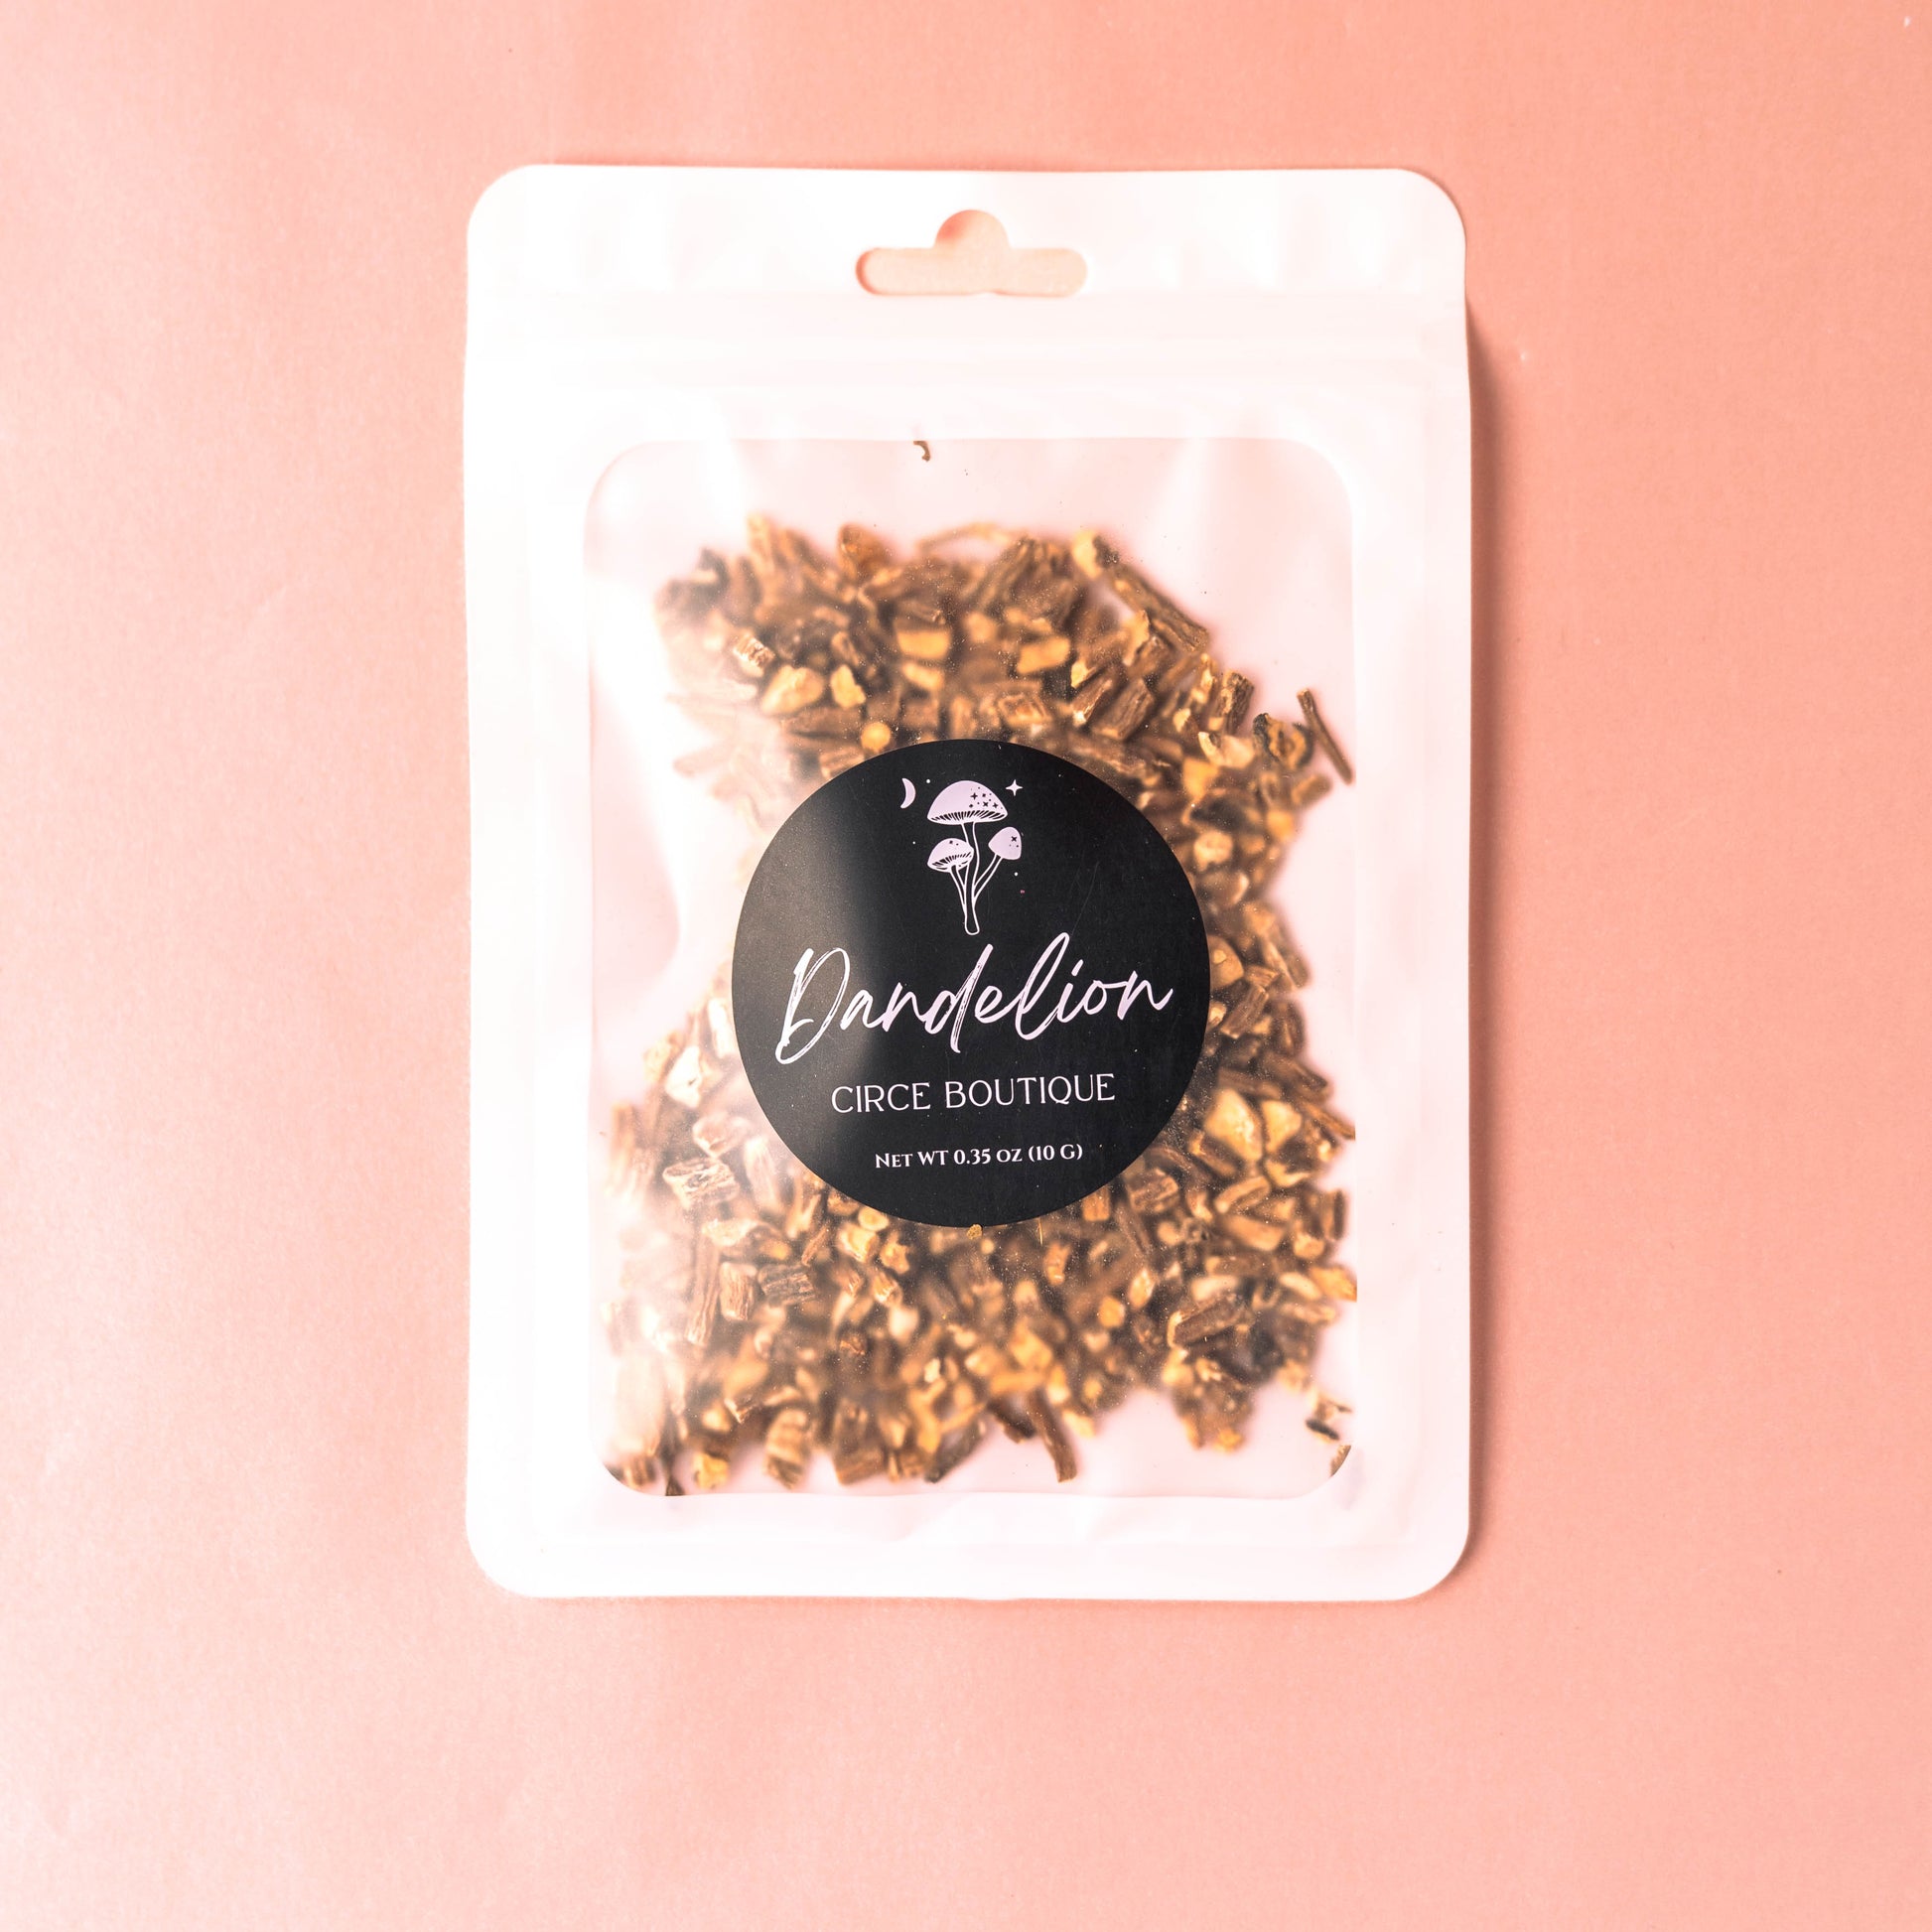 CIRCE Dandelion .35 oz. - Herbs  from CirceBoutique